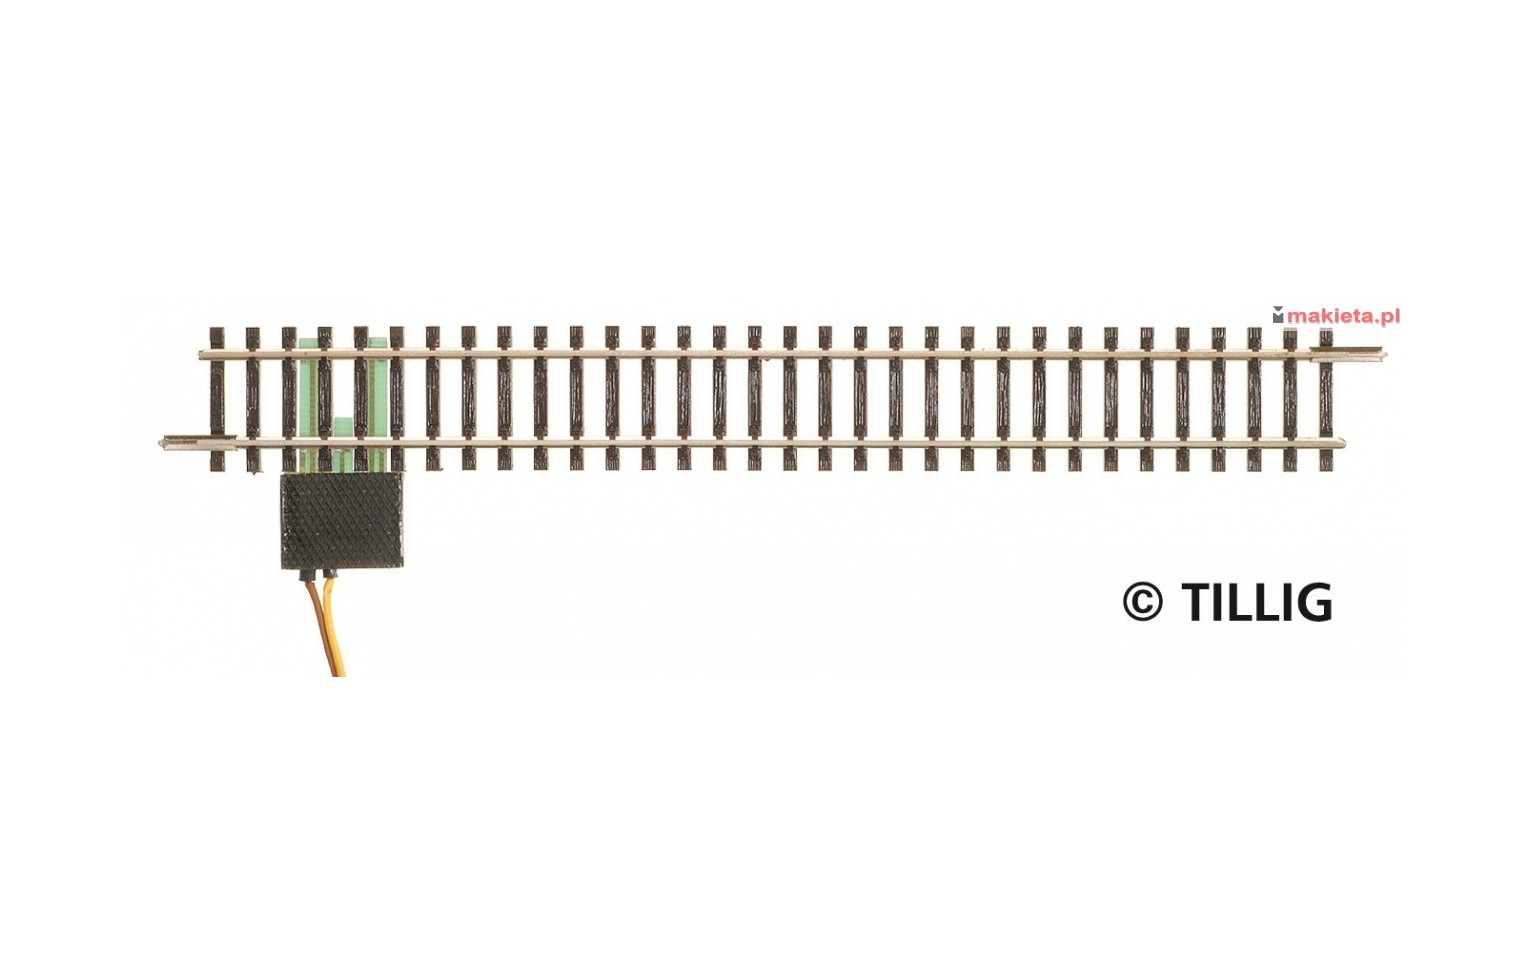 Tillig 83143, Tor podłączeniowy G1, 166 mm, skala TT